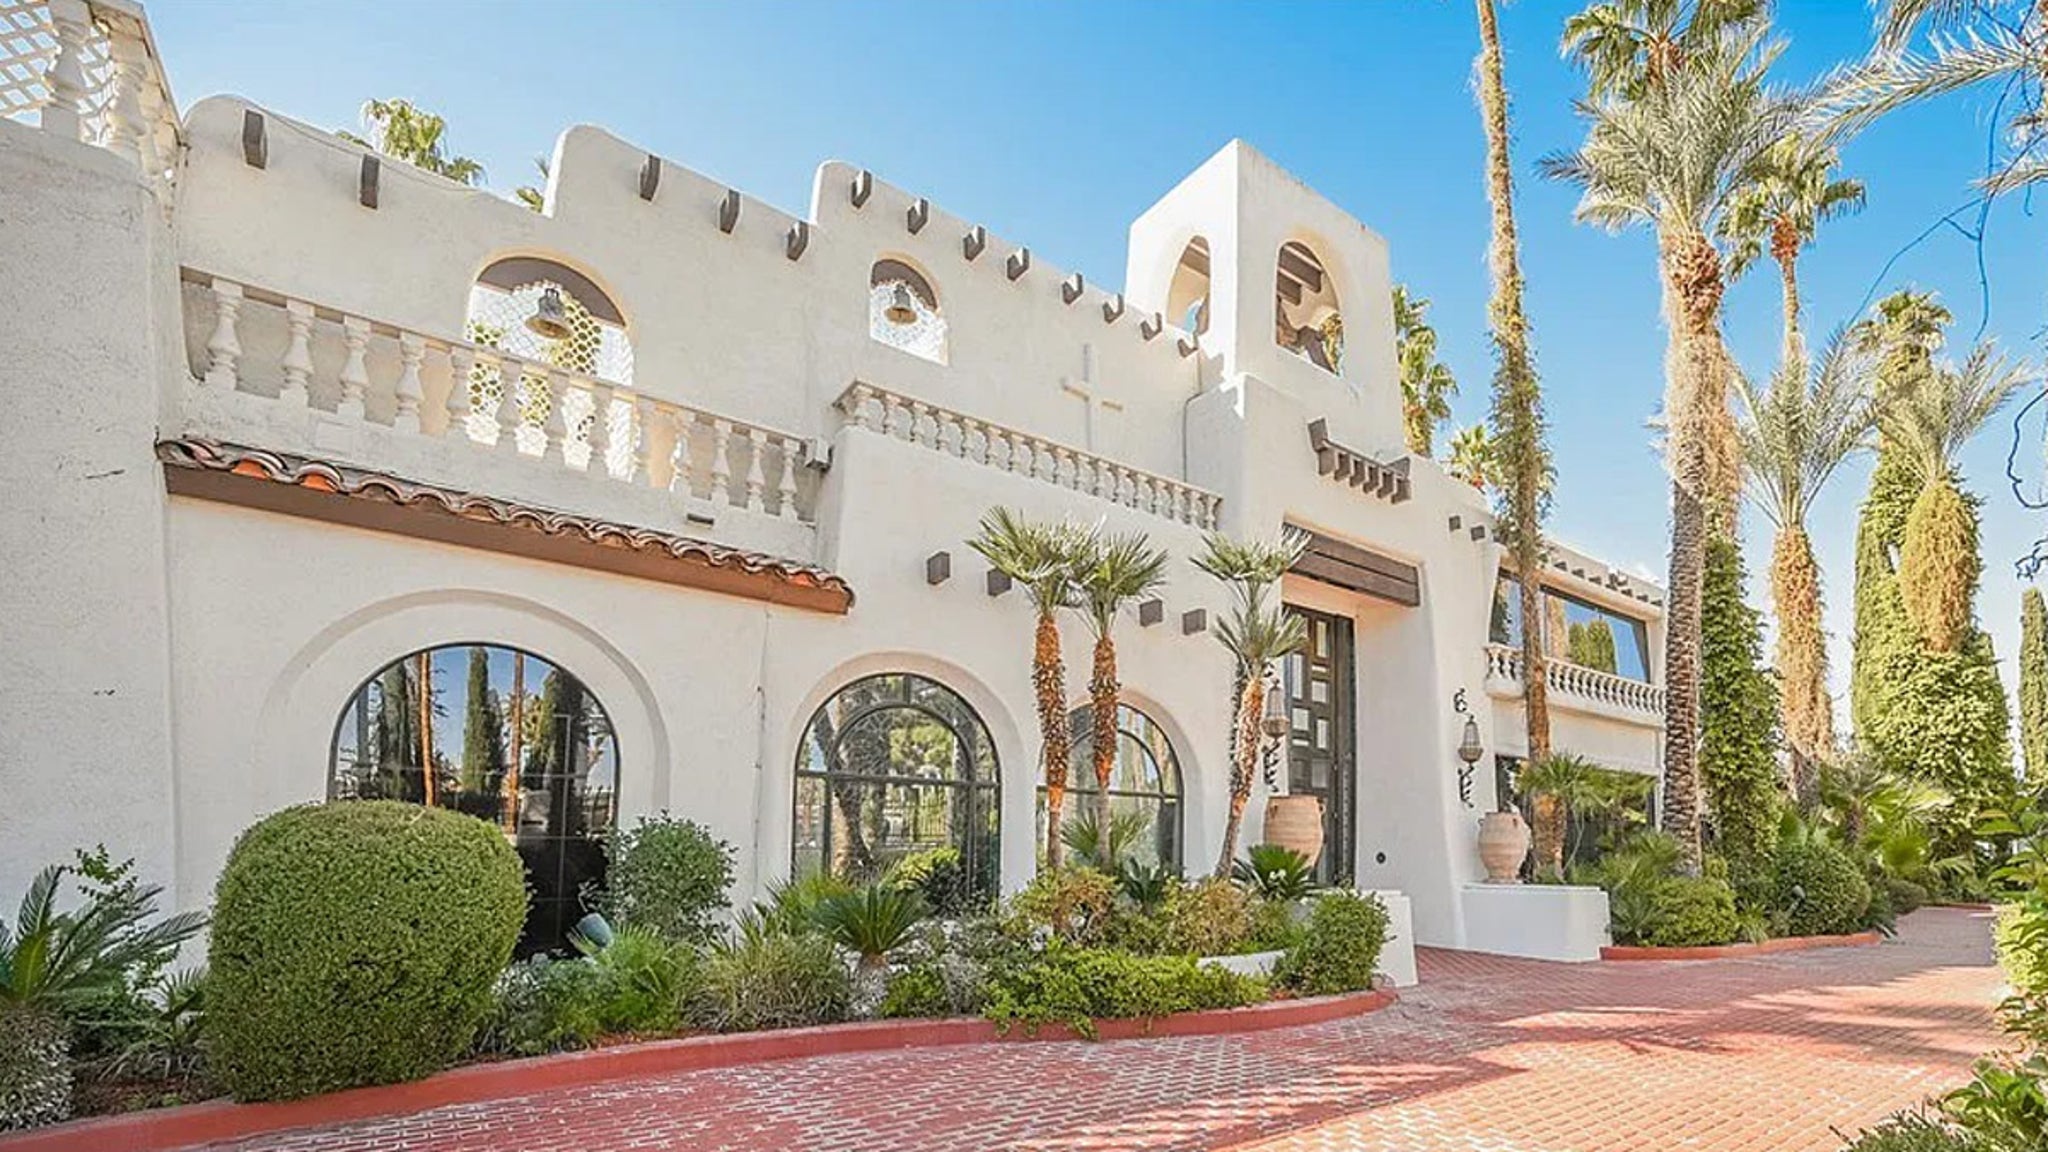 Siegfried & Roy’s Las Vegas ‘Jungle Palace’ Mansion For Sale At $3 Million